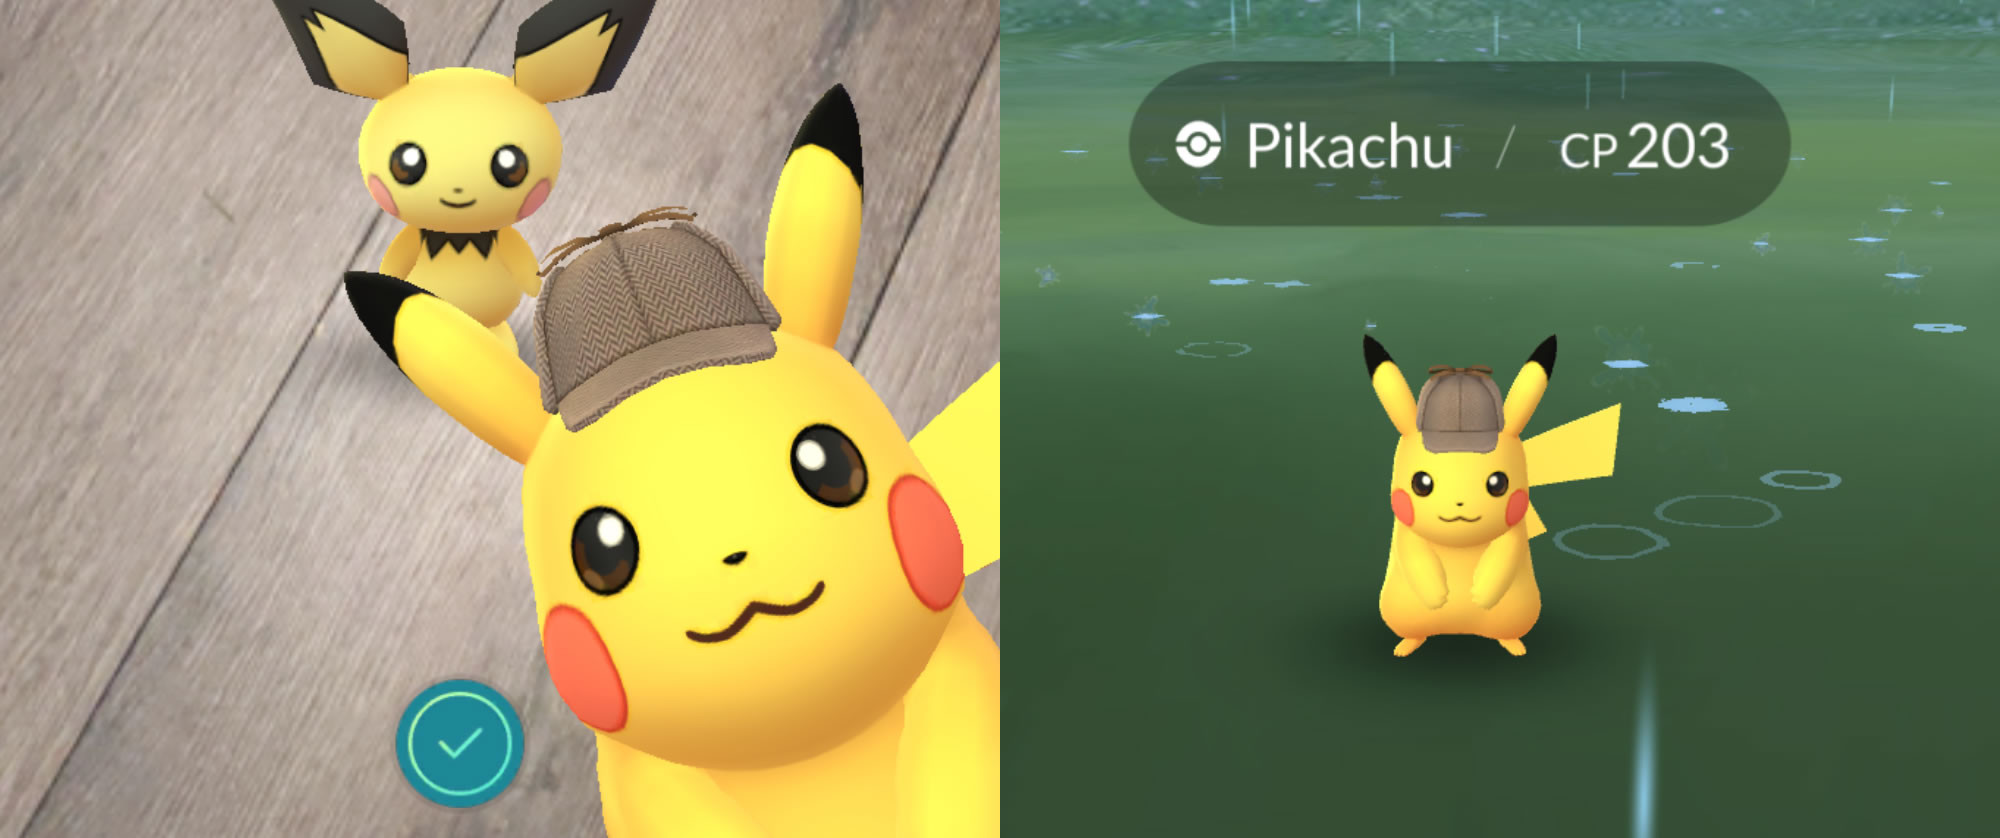 Pikachu versione detective su Pokémon GO